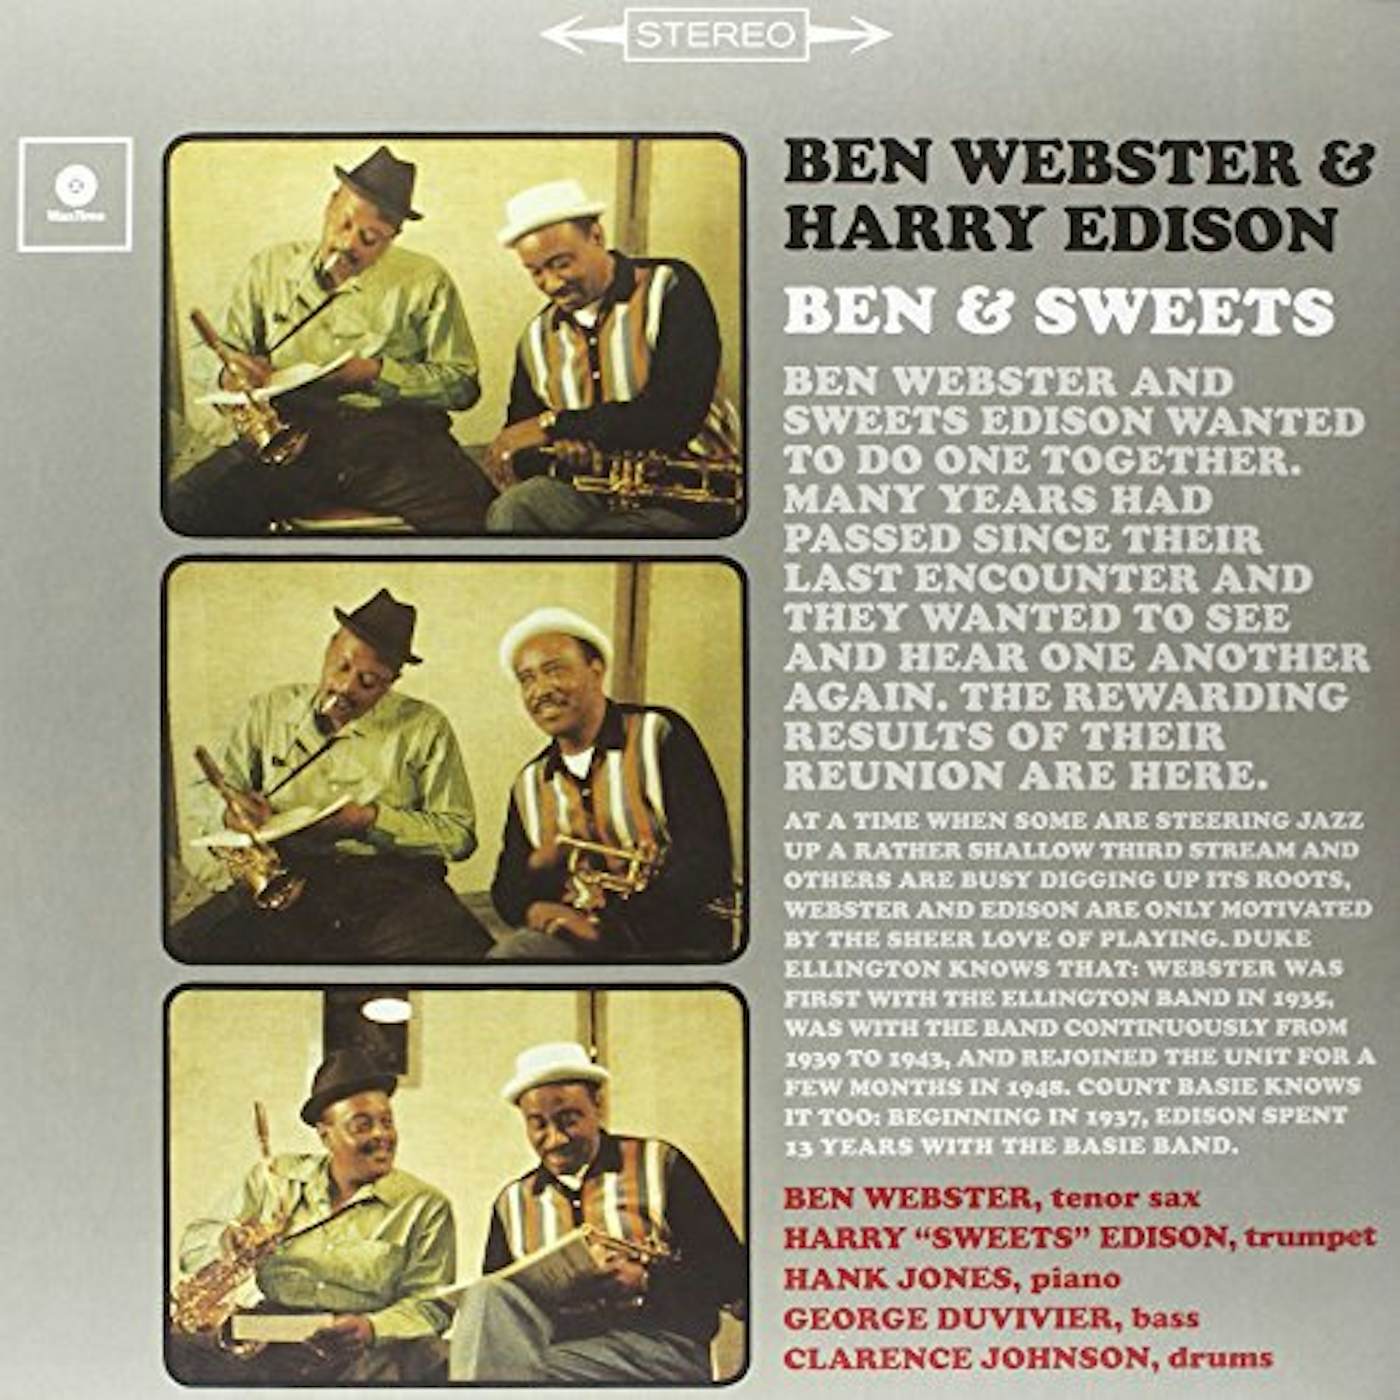 Ben Webster & Harry Edison BEN & SWEET (BONUS TRACK) Vinyl Record - 180 Gram Pressing